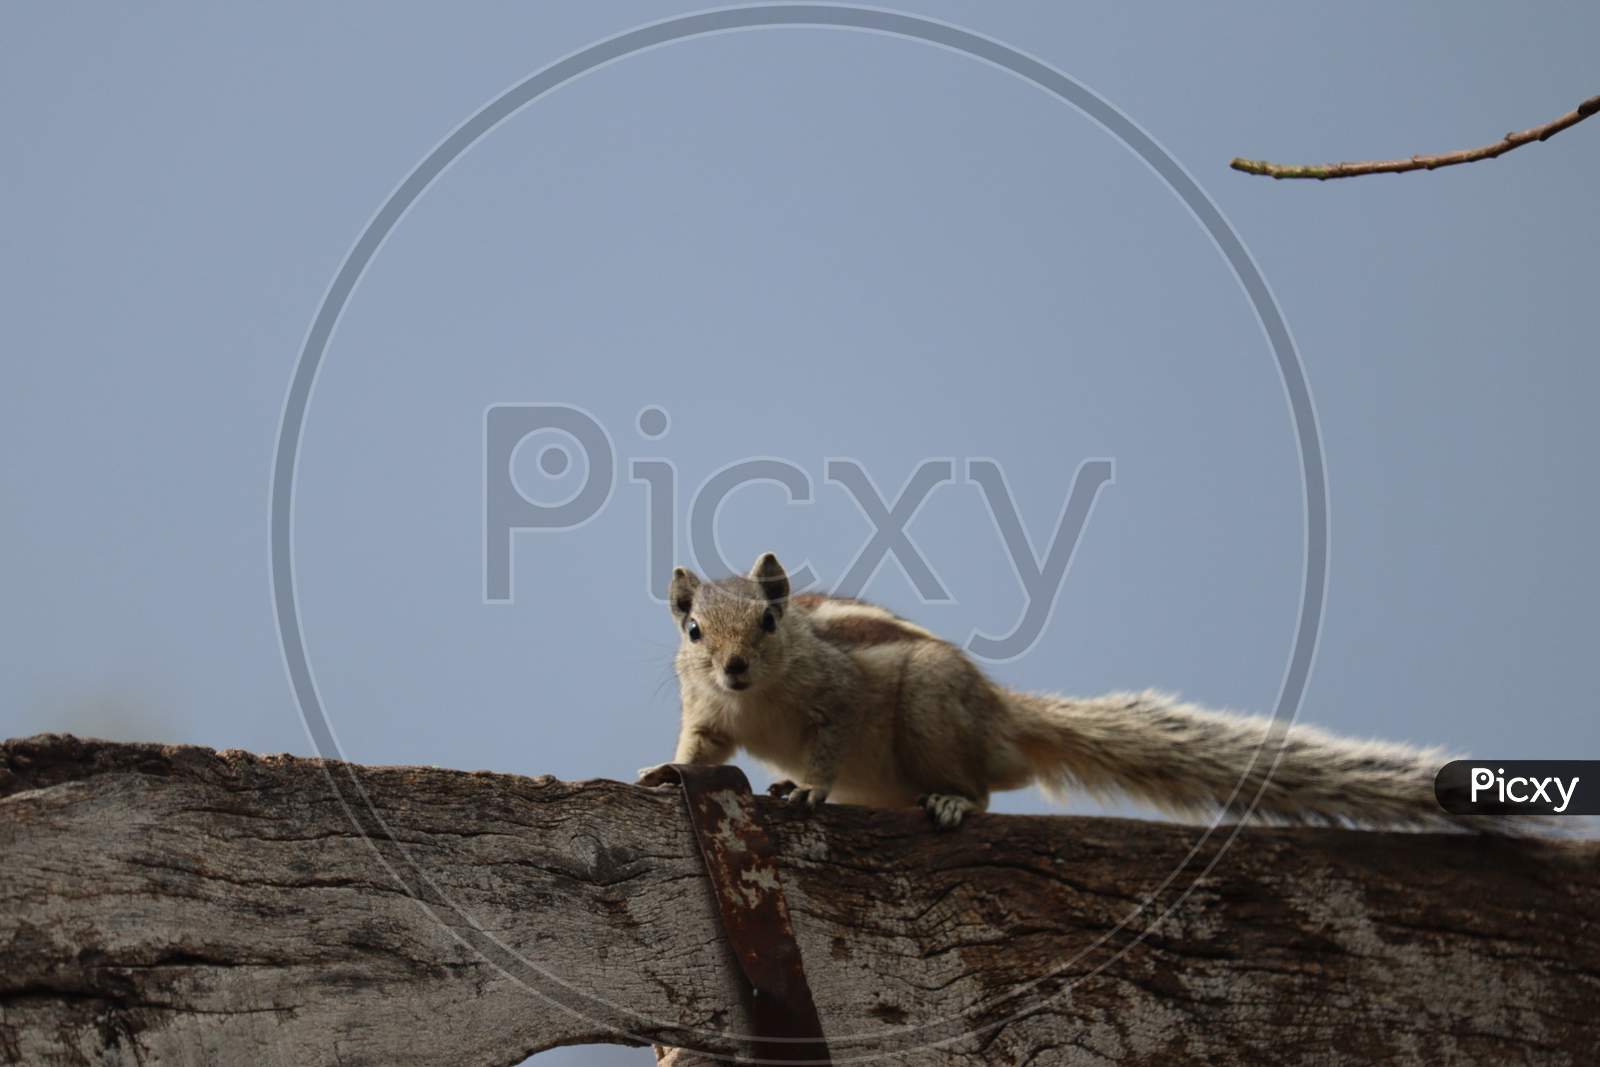 Beautiful squirrel photo in Punjab, India